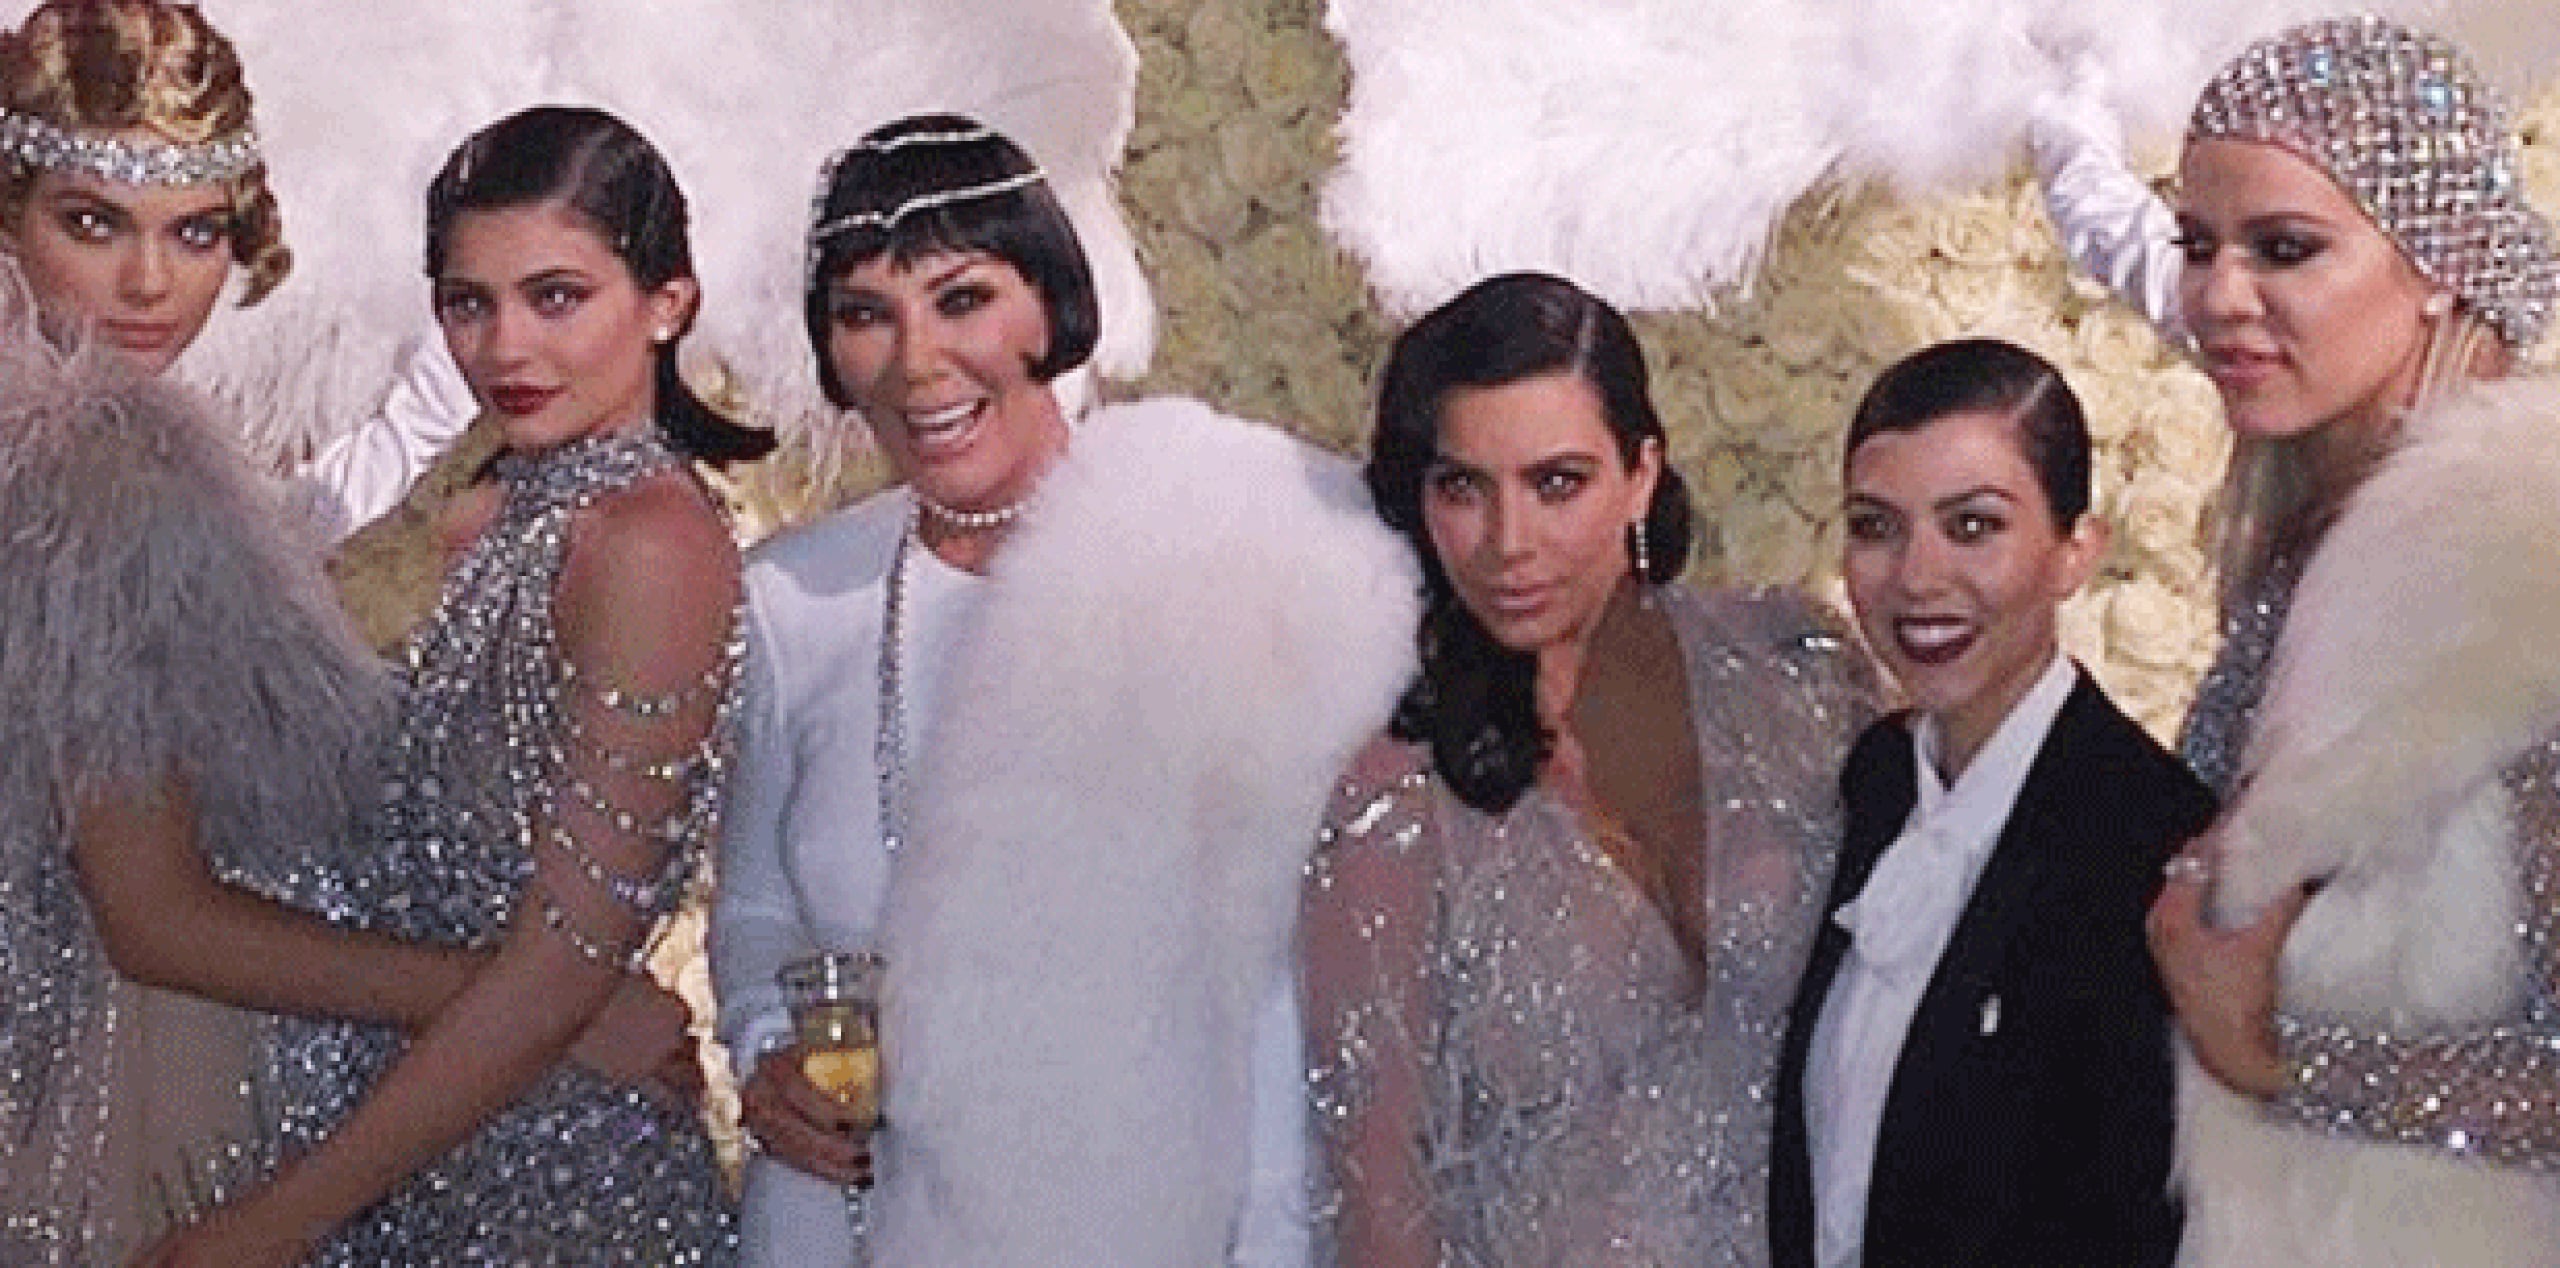 Sus famosas hijas, Kourtney, Kim y Khloé Kardashian y Kylie y Kendall Jenner estuvieron en el festejo. (Instagram)